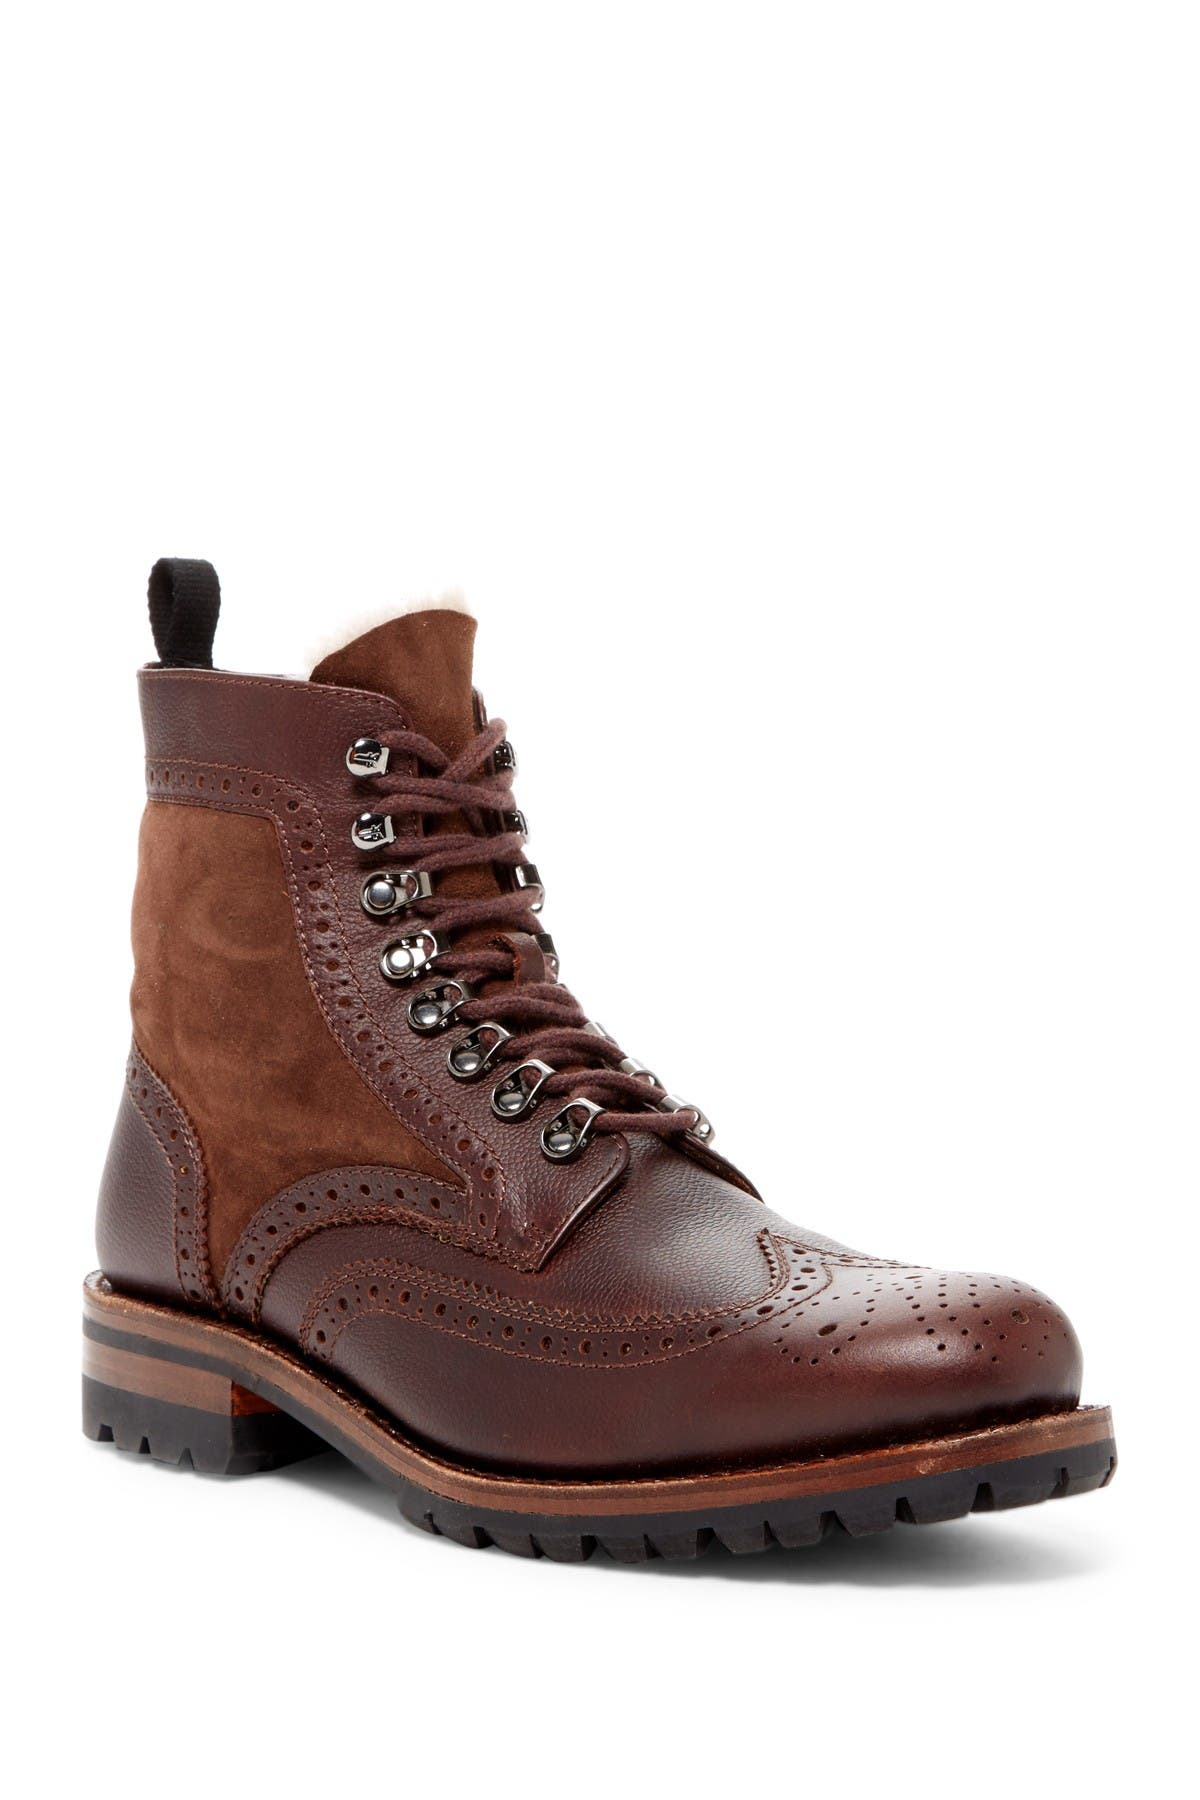 george leather adirondack boot